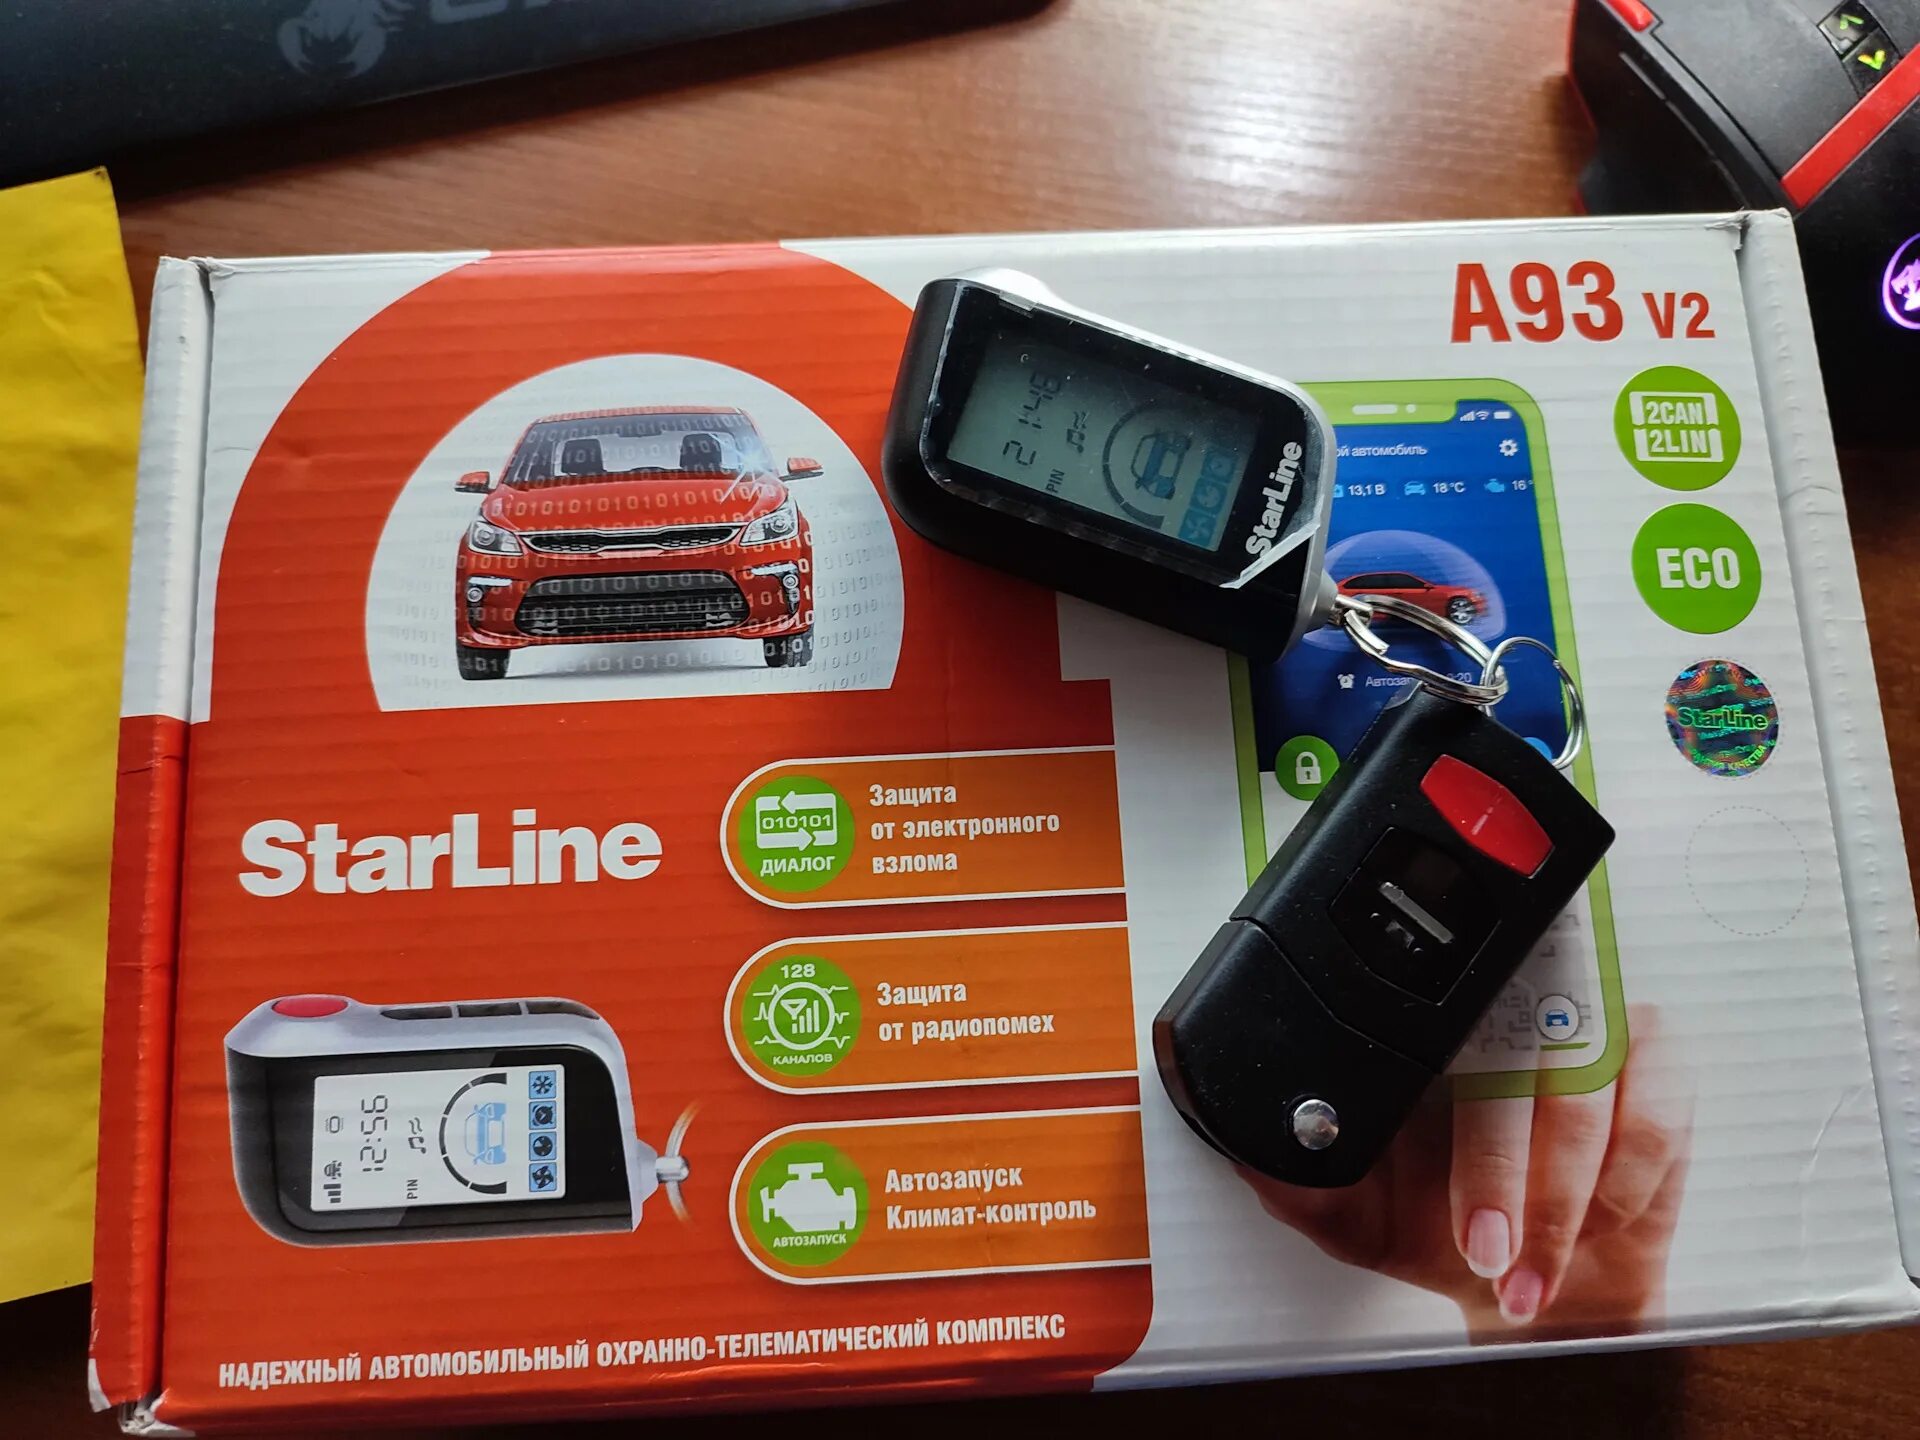 Starline a93 2can gsm. Сигнализация с автозапуском STARLINE a93. Автосигнализация STARLINE a93 v2 2can+2lin GSM Eco. STARLINE a93 Eco. STARLINE a93 v2 полная комплектация.